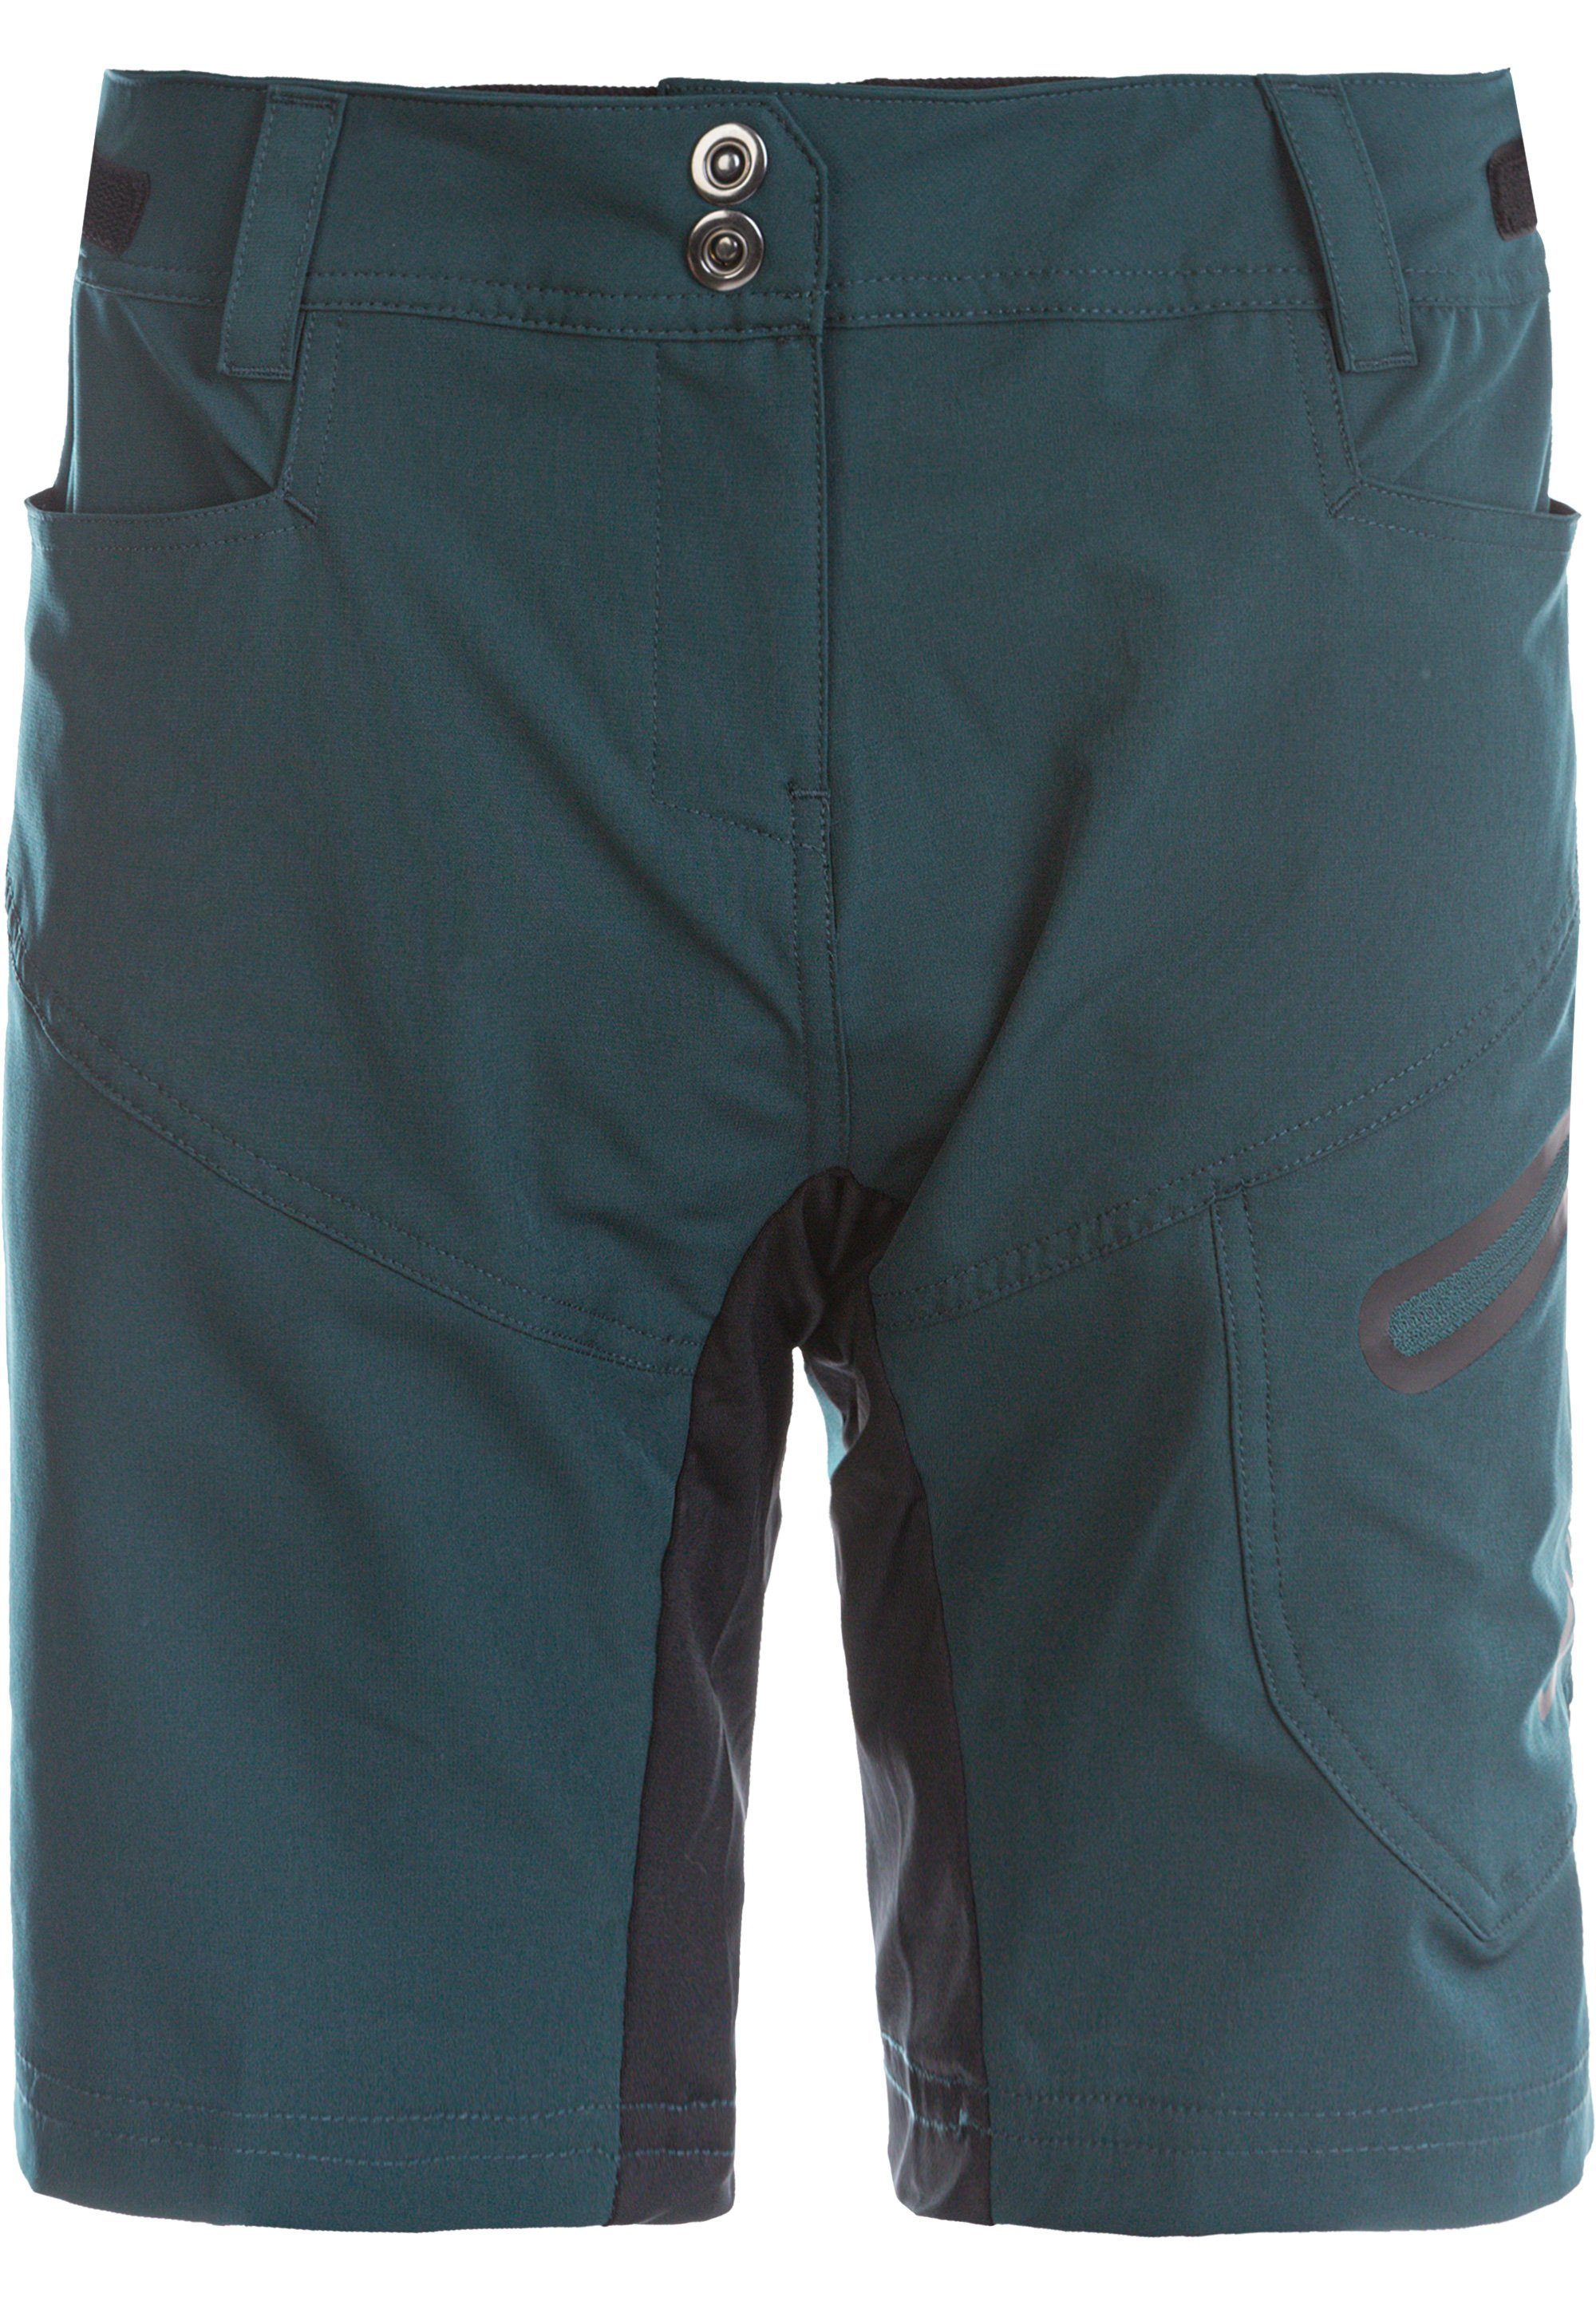 ENDURANCE Radhose Jamilla W 2 1 mit dunkelgrün Shorts herausnehmbarer Innen-Tights in